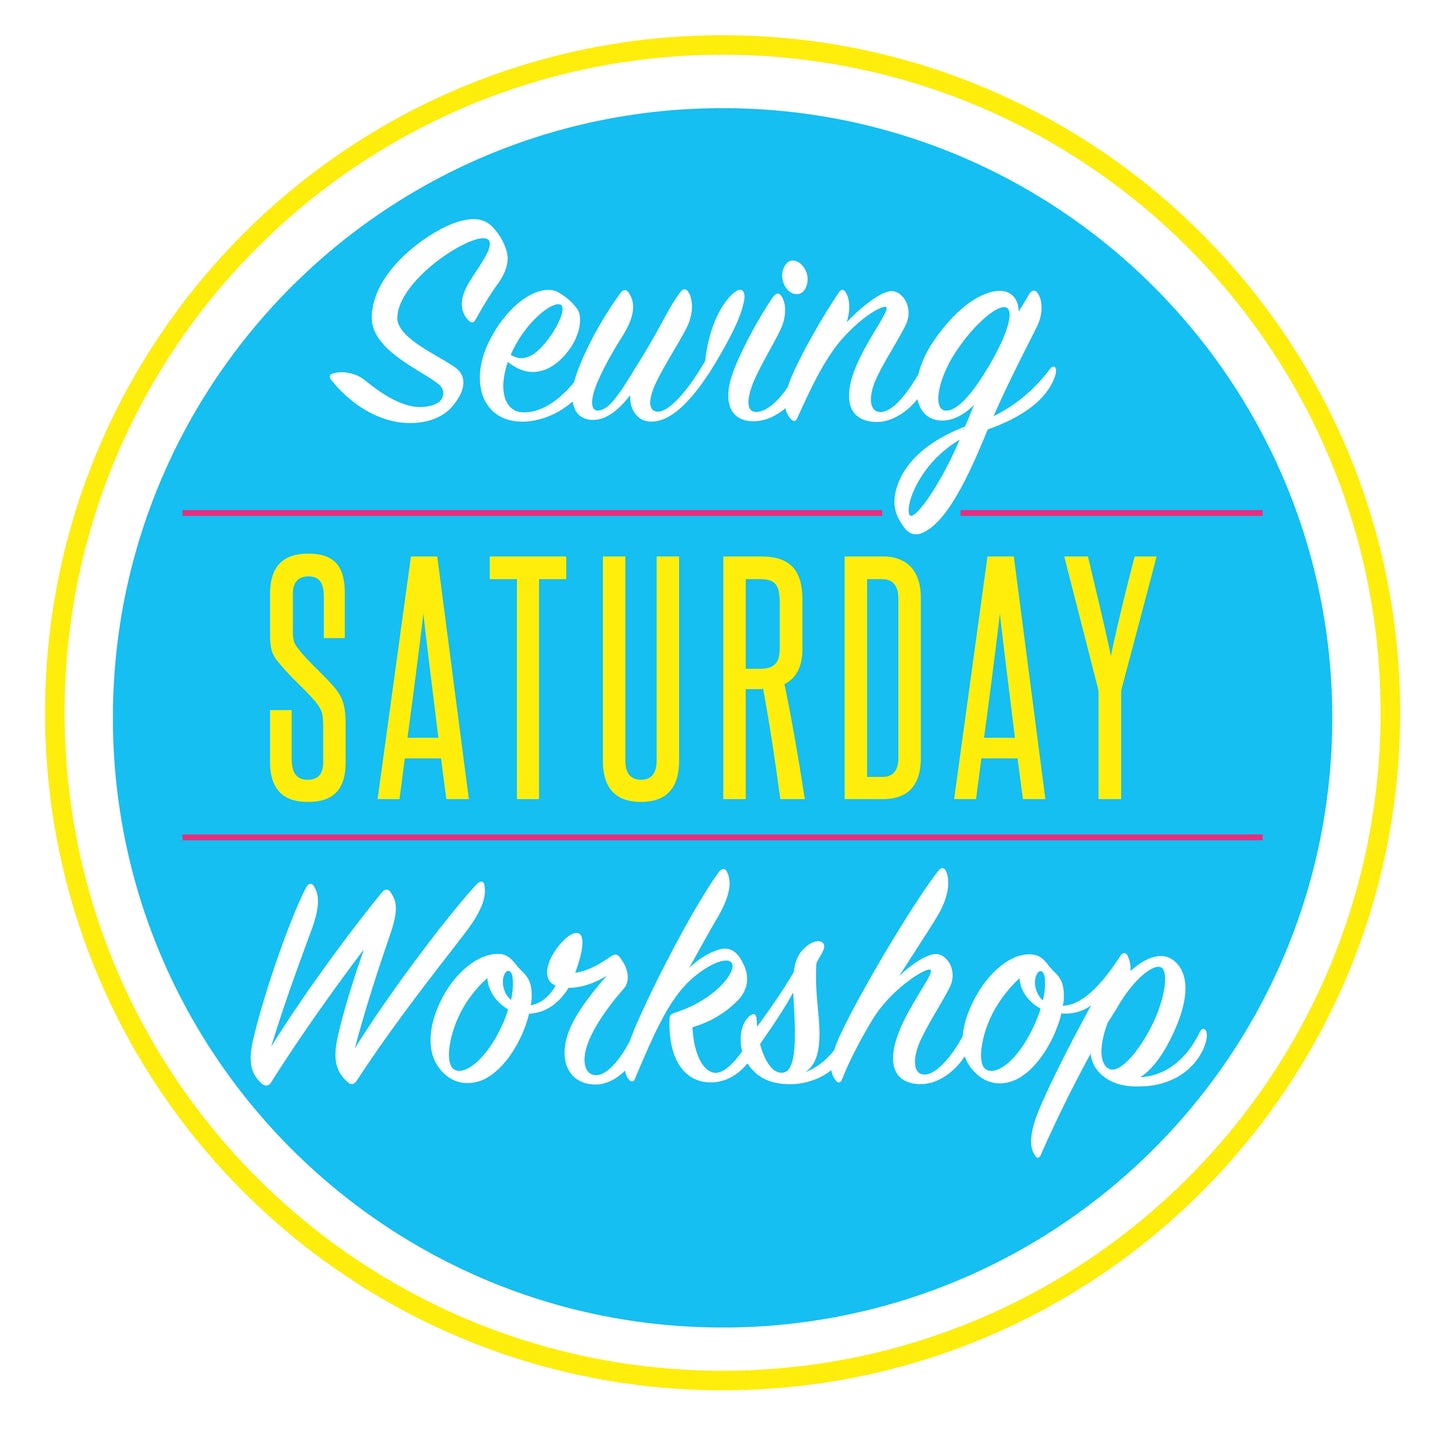 Sewing Workshop: Saturday, June 22, 9am-3pm